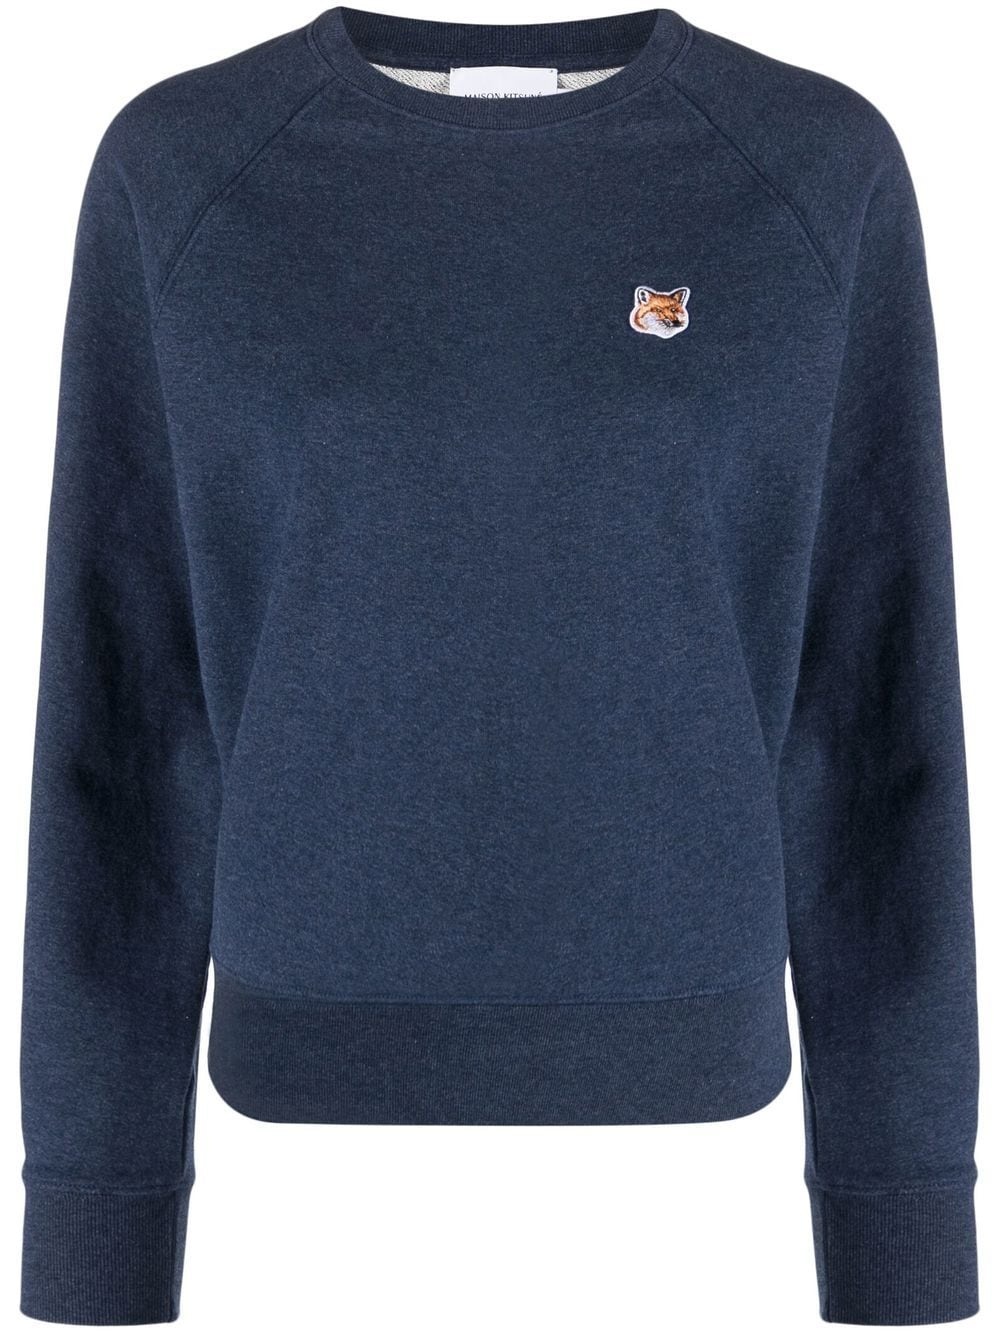 embroidered-fox sweatshirt - 1